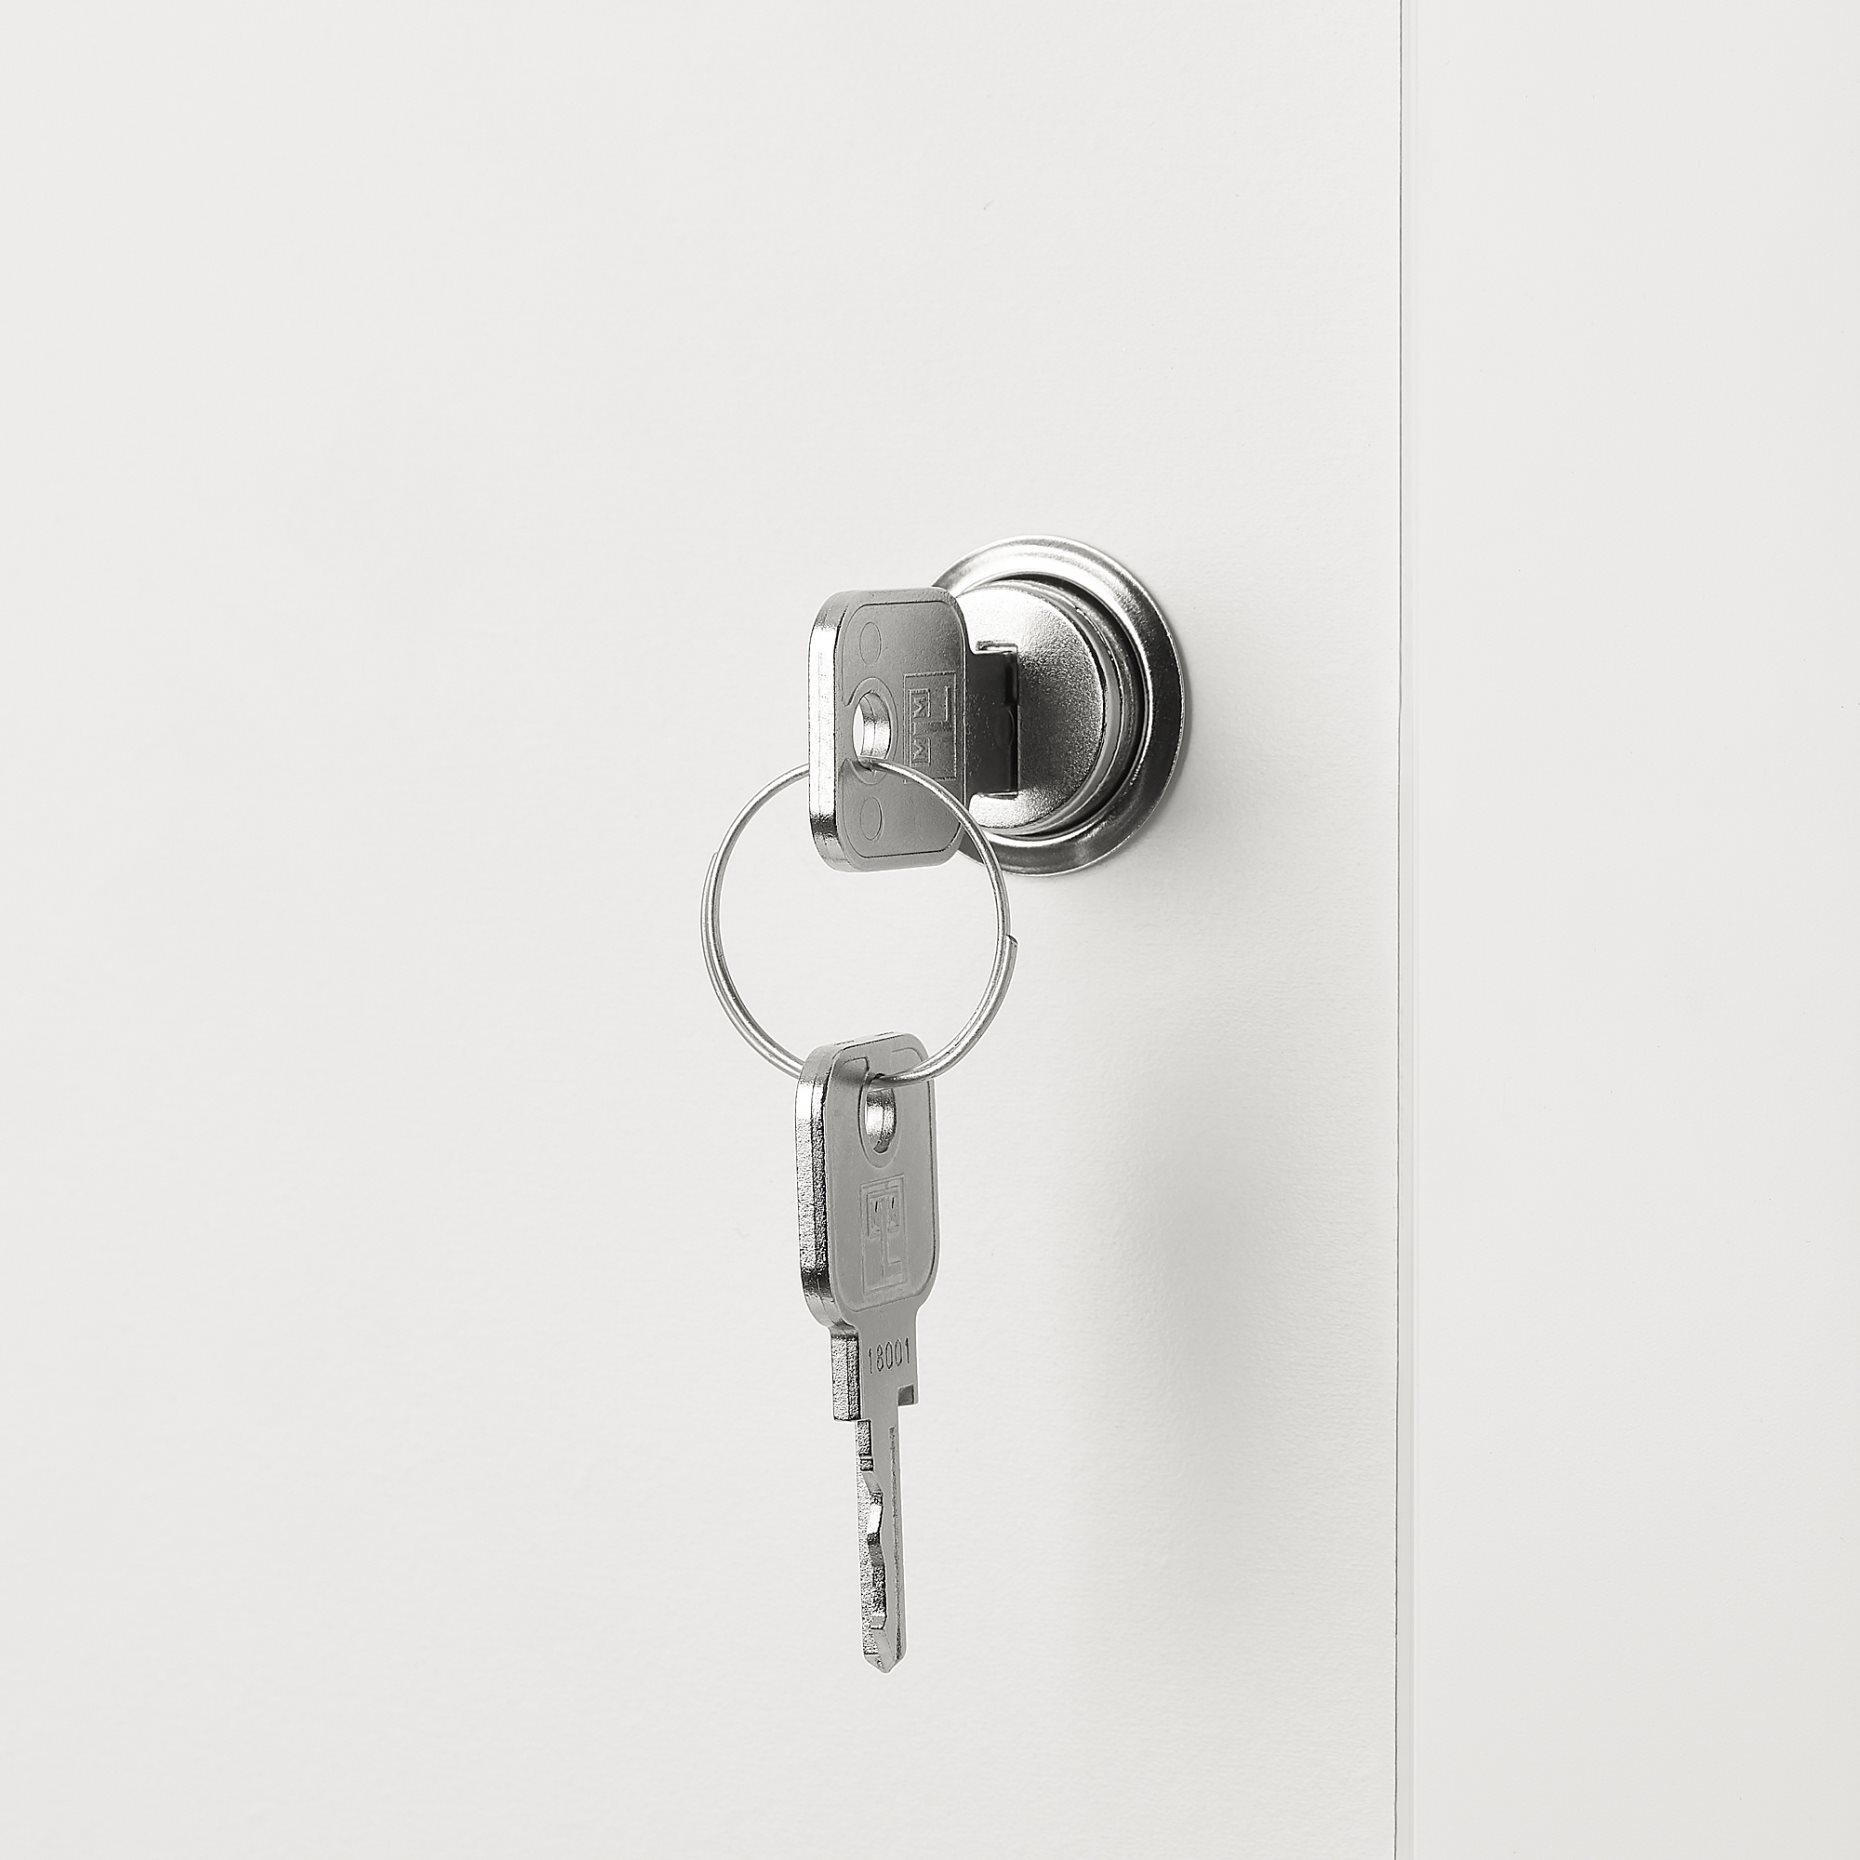 KALLAX, ένθετο με πόρτα με κλειδί, 33x33 cm, 405.442.74